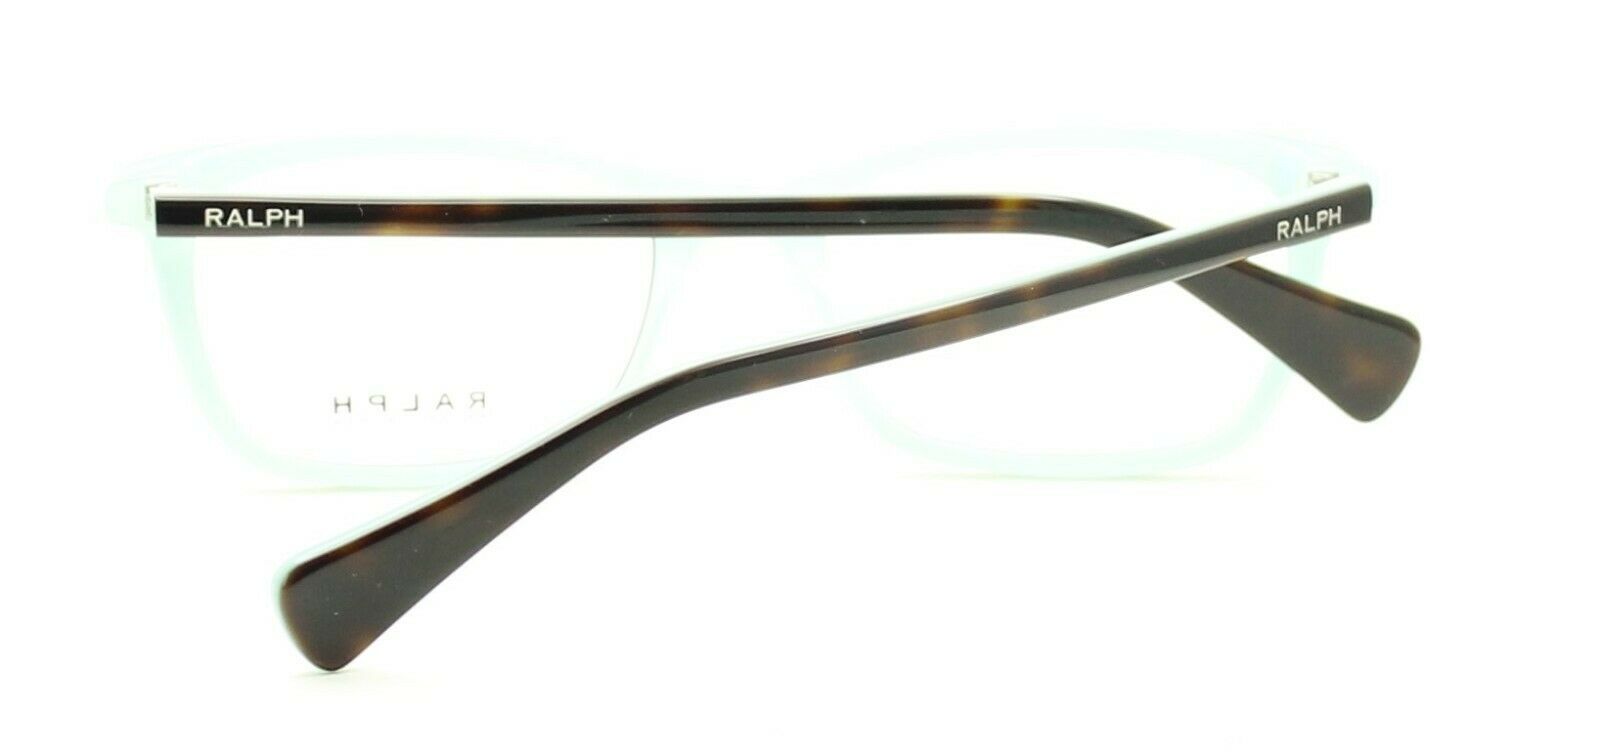 RALPH LAUREN RA 7089 601 51mm RX Optical Eyewear FRAMES Eyeglasses Glasses - New